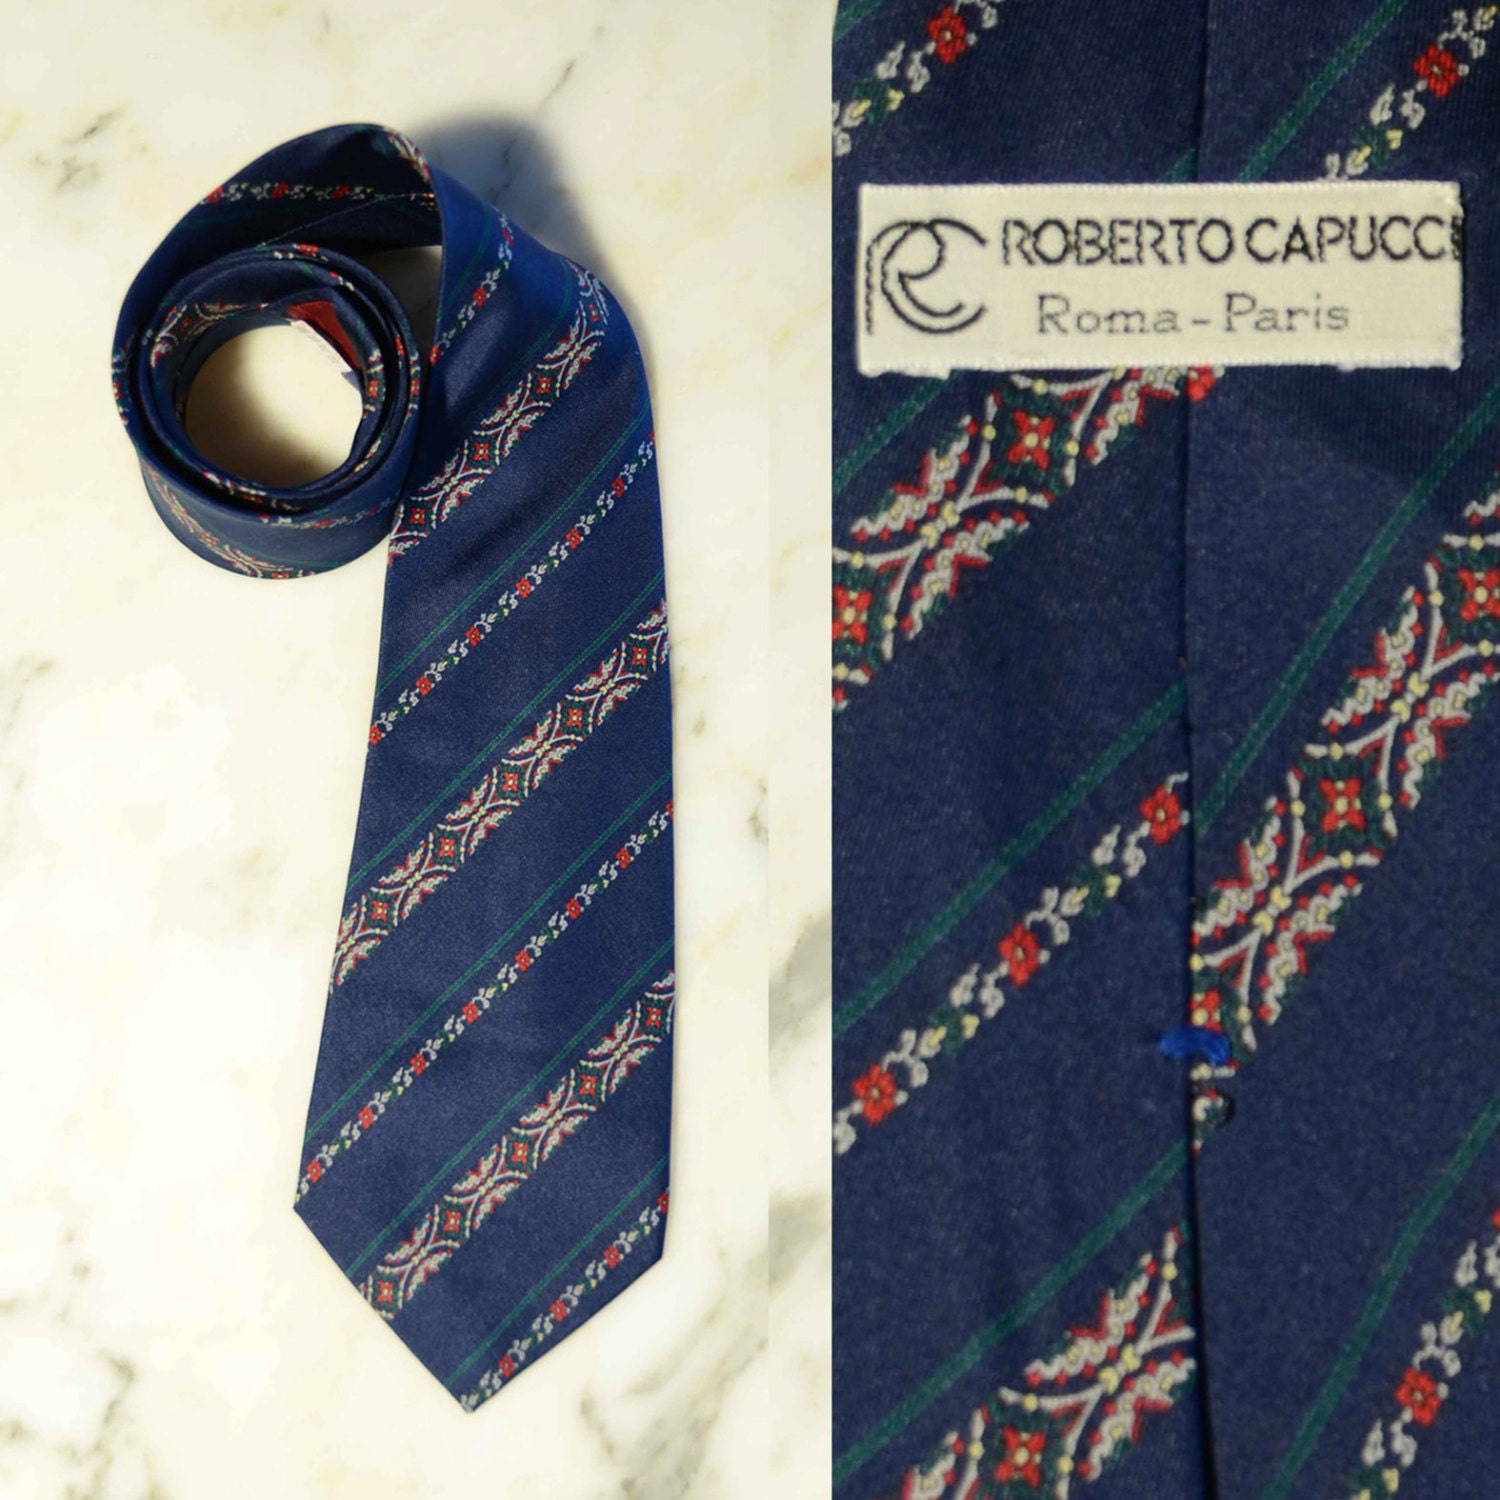 Roberto Capucci vintage nektie, made in italy in the 70’s. Vintage tie ...